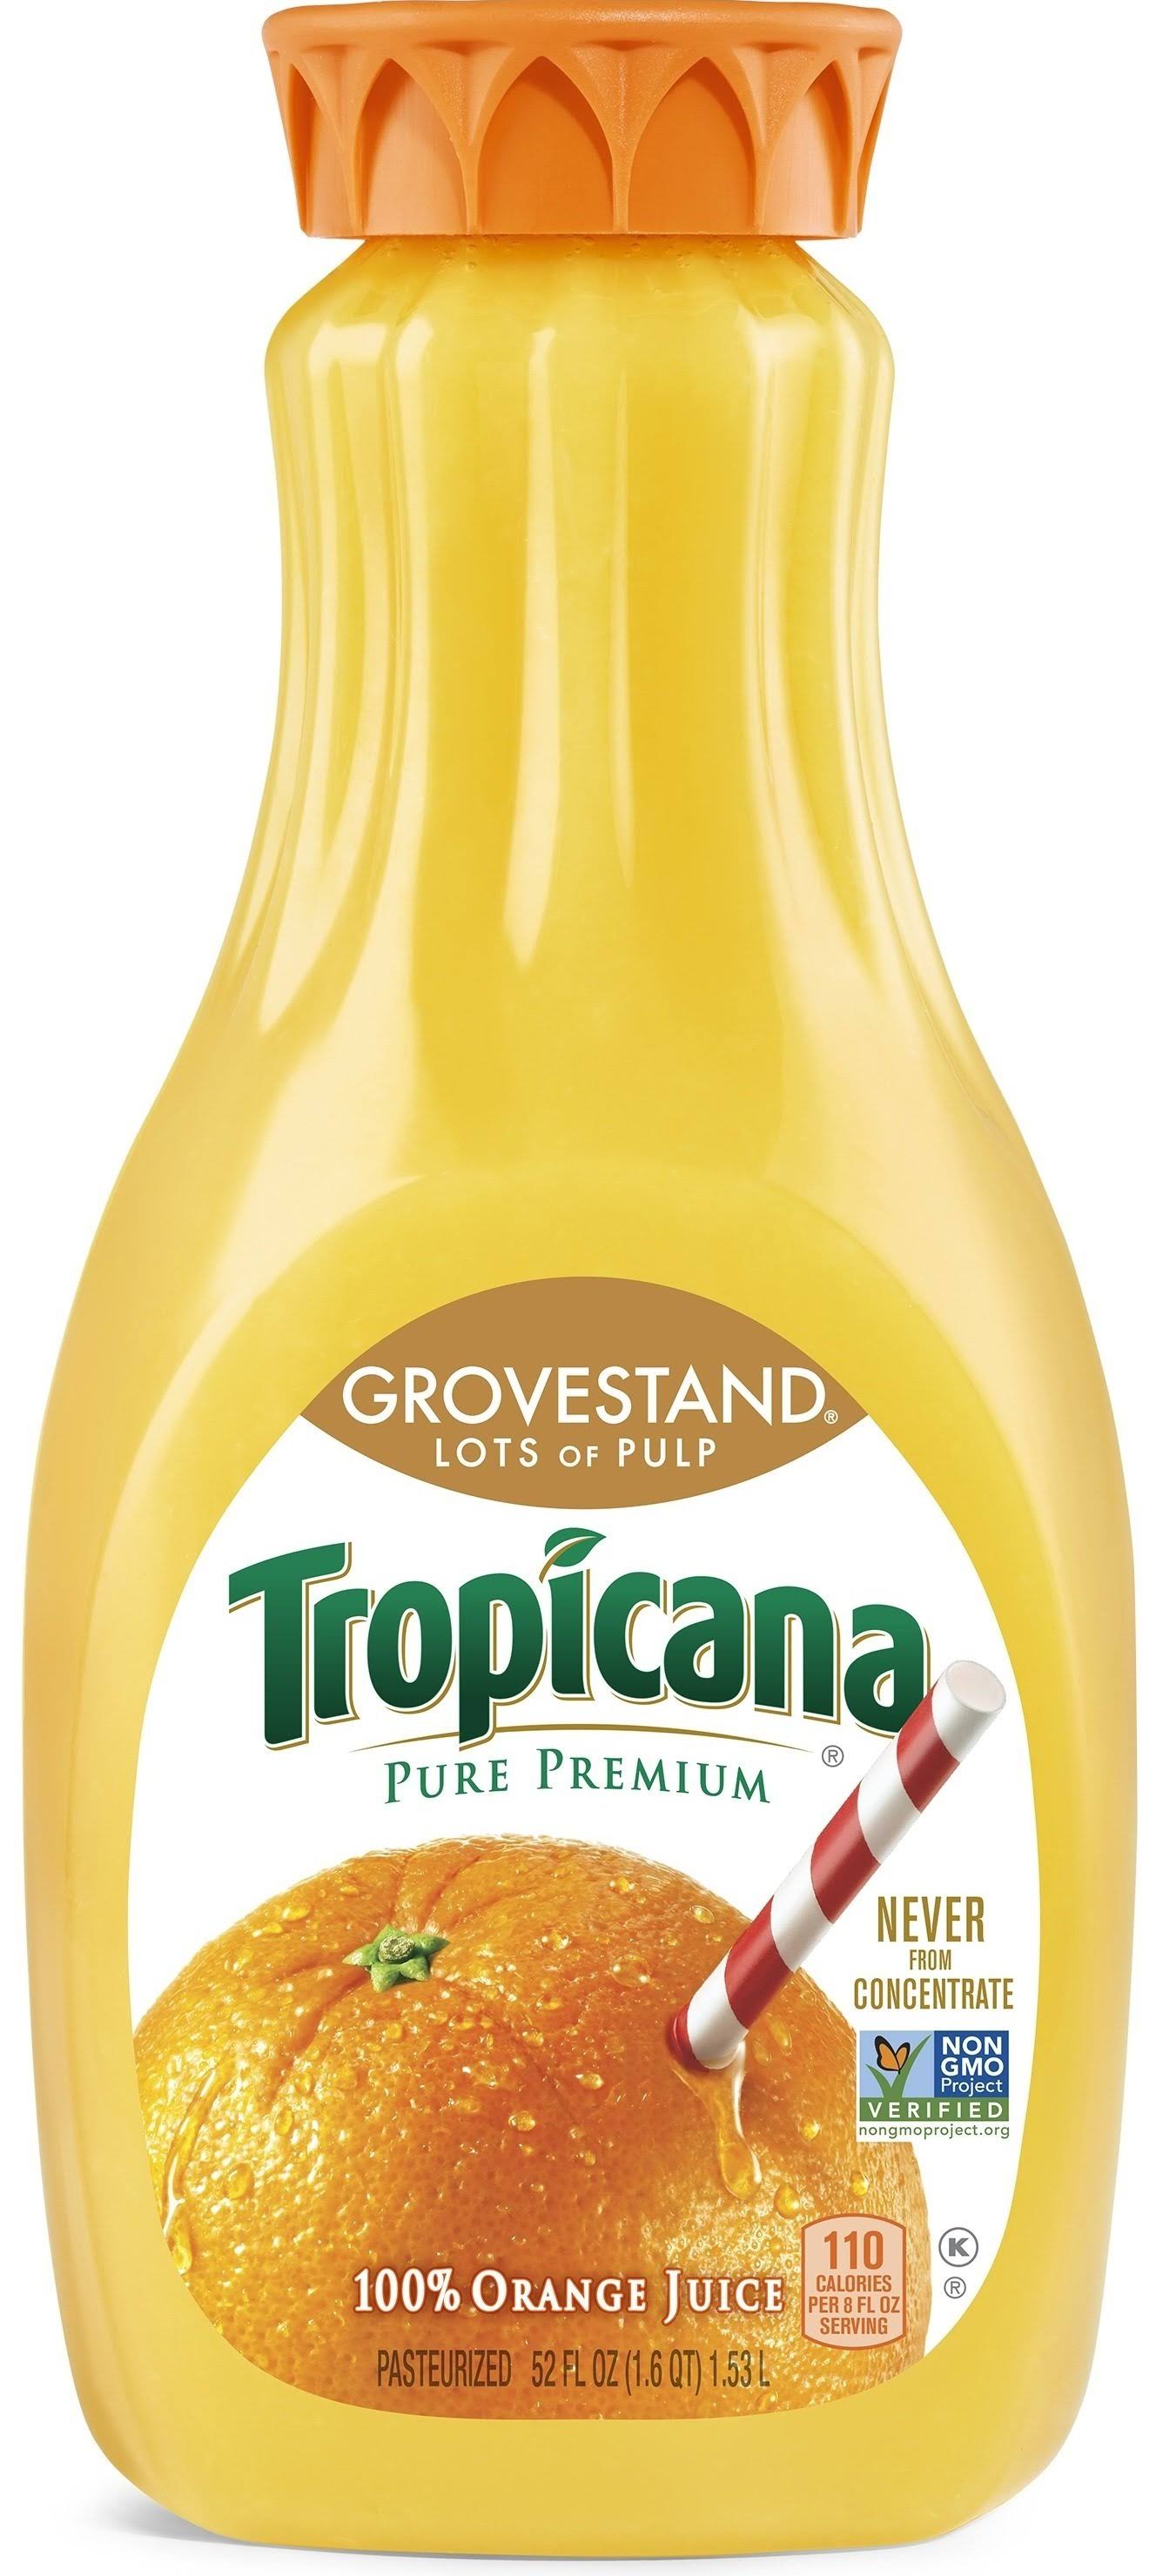 Tropicana Pure Premium Grovestand Orange Juice - 52oz